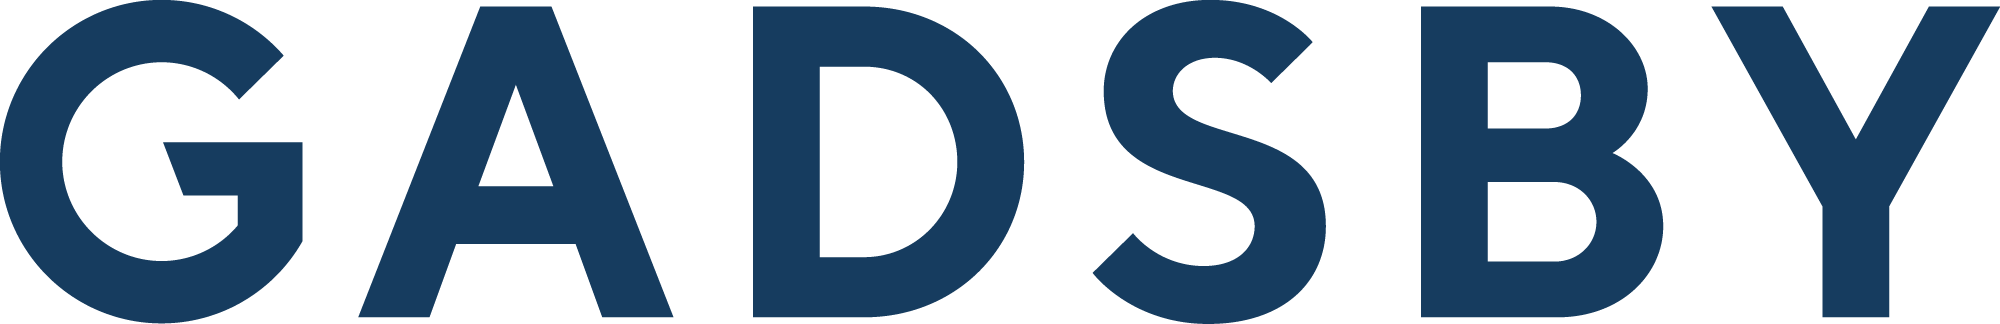 logo for Gadsby